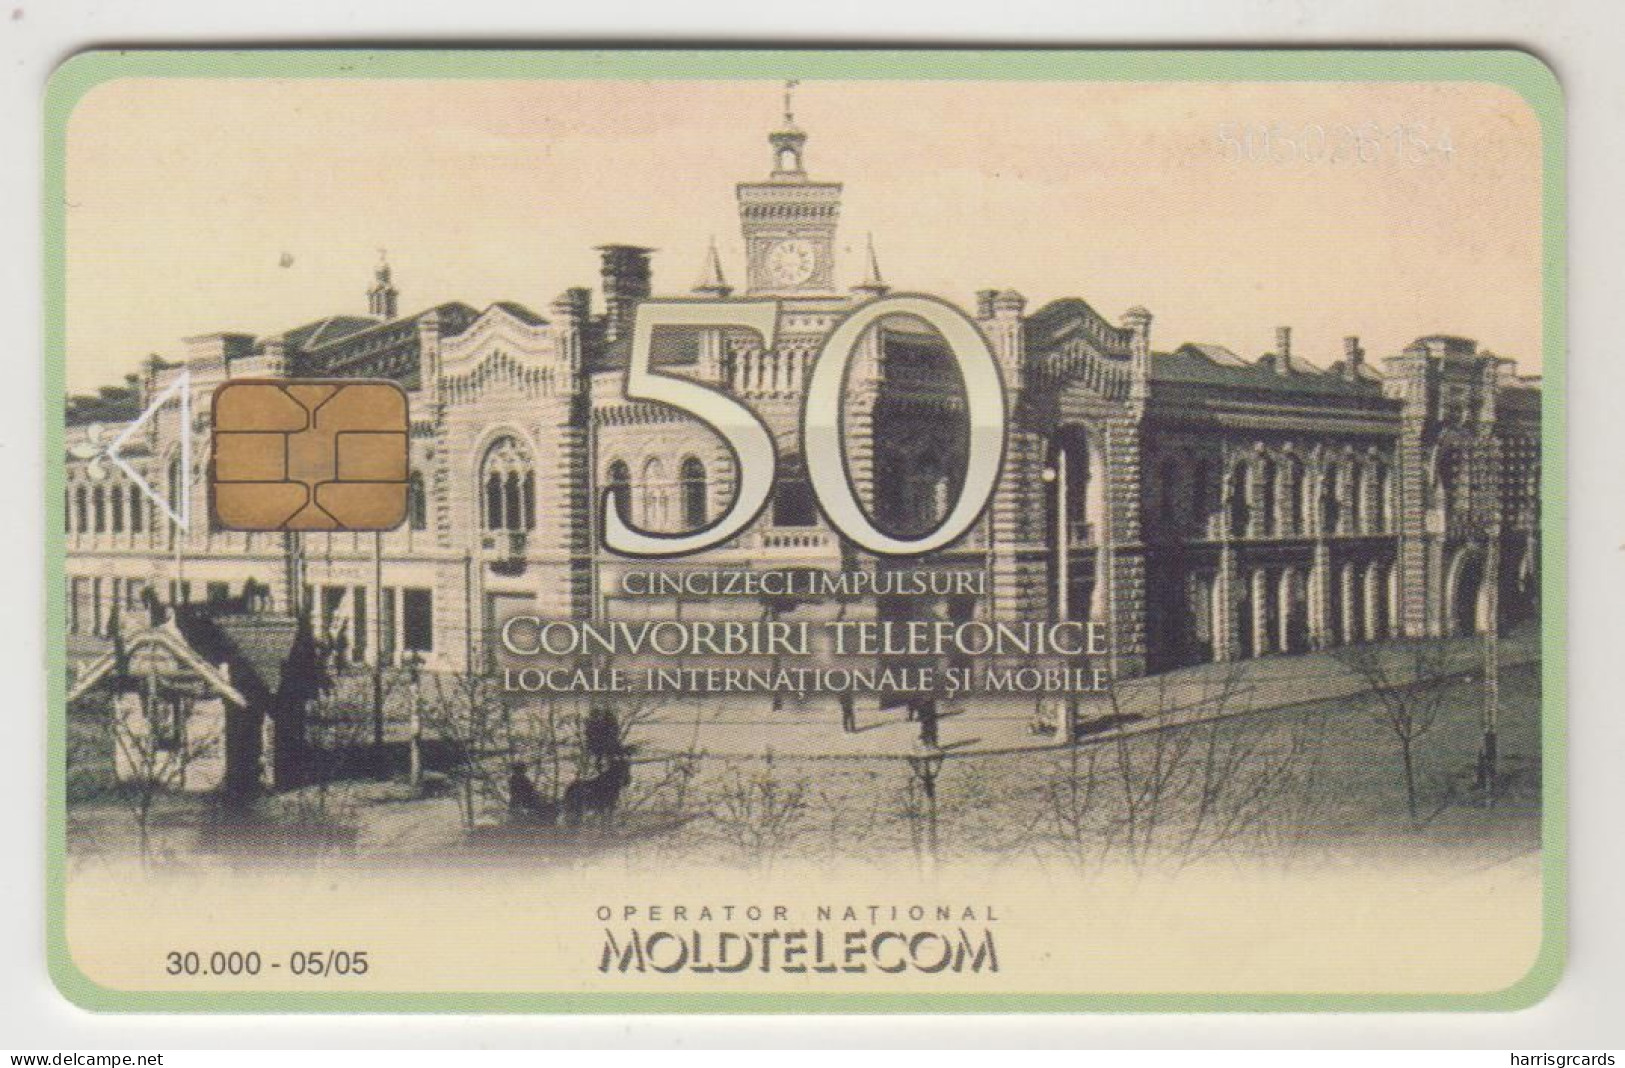 MOLDOVA - Passaj, Chip:CHT08, Moldtelecom 50 Units, 05/05, Tirage 30.000,used - Moldawien (Moldau)